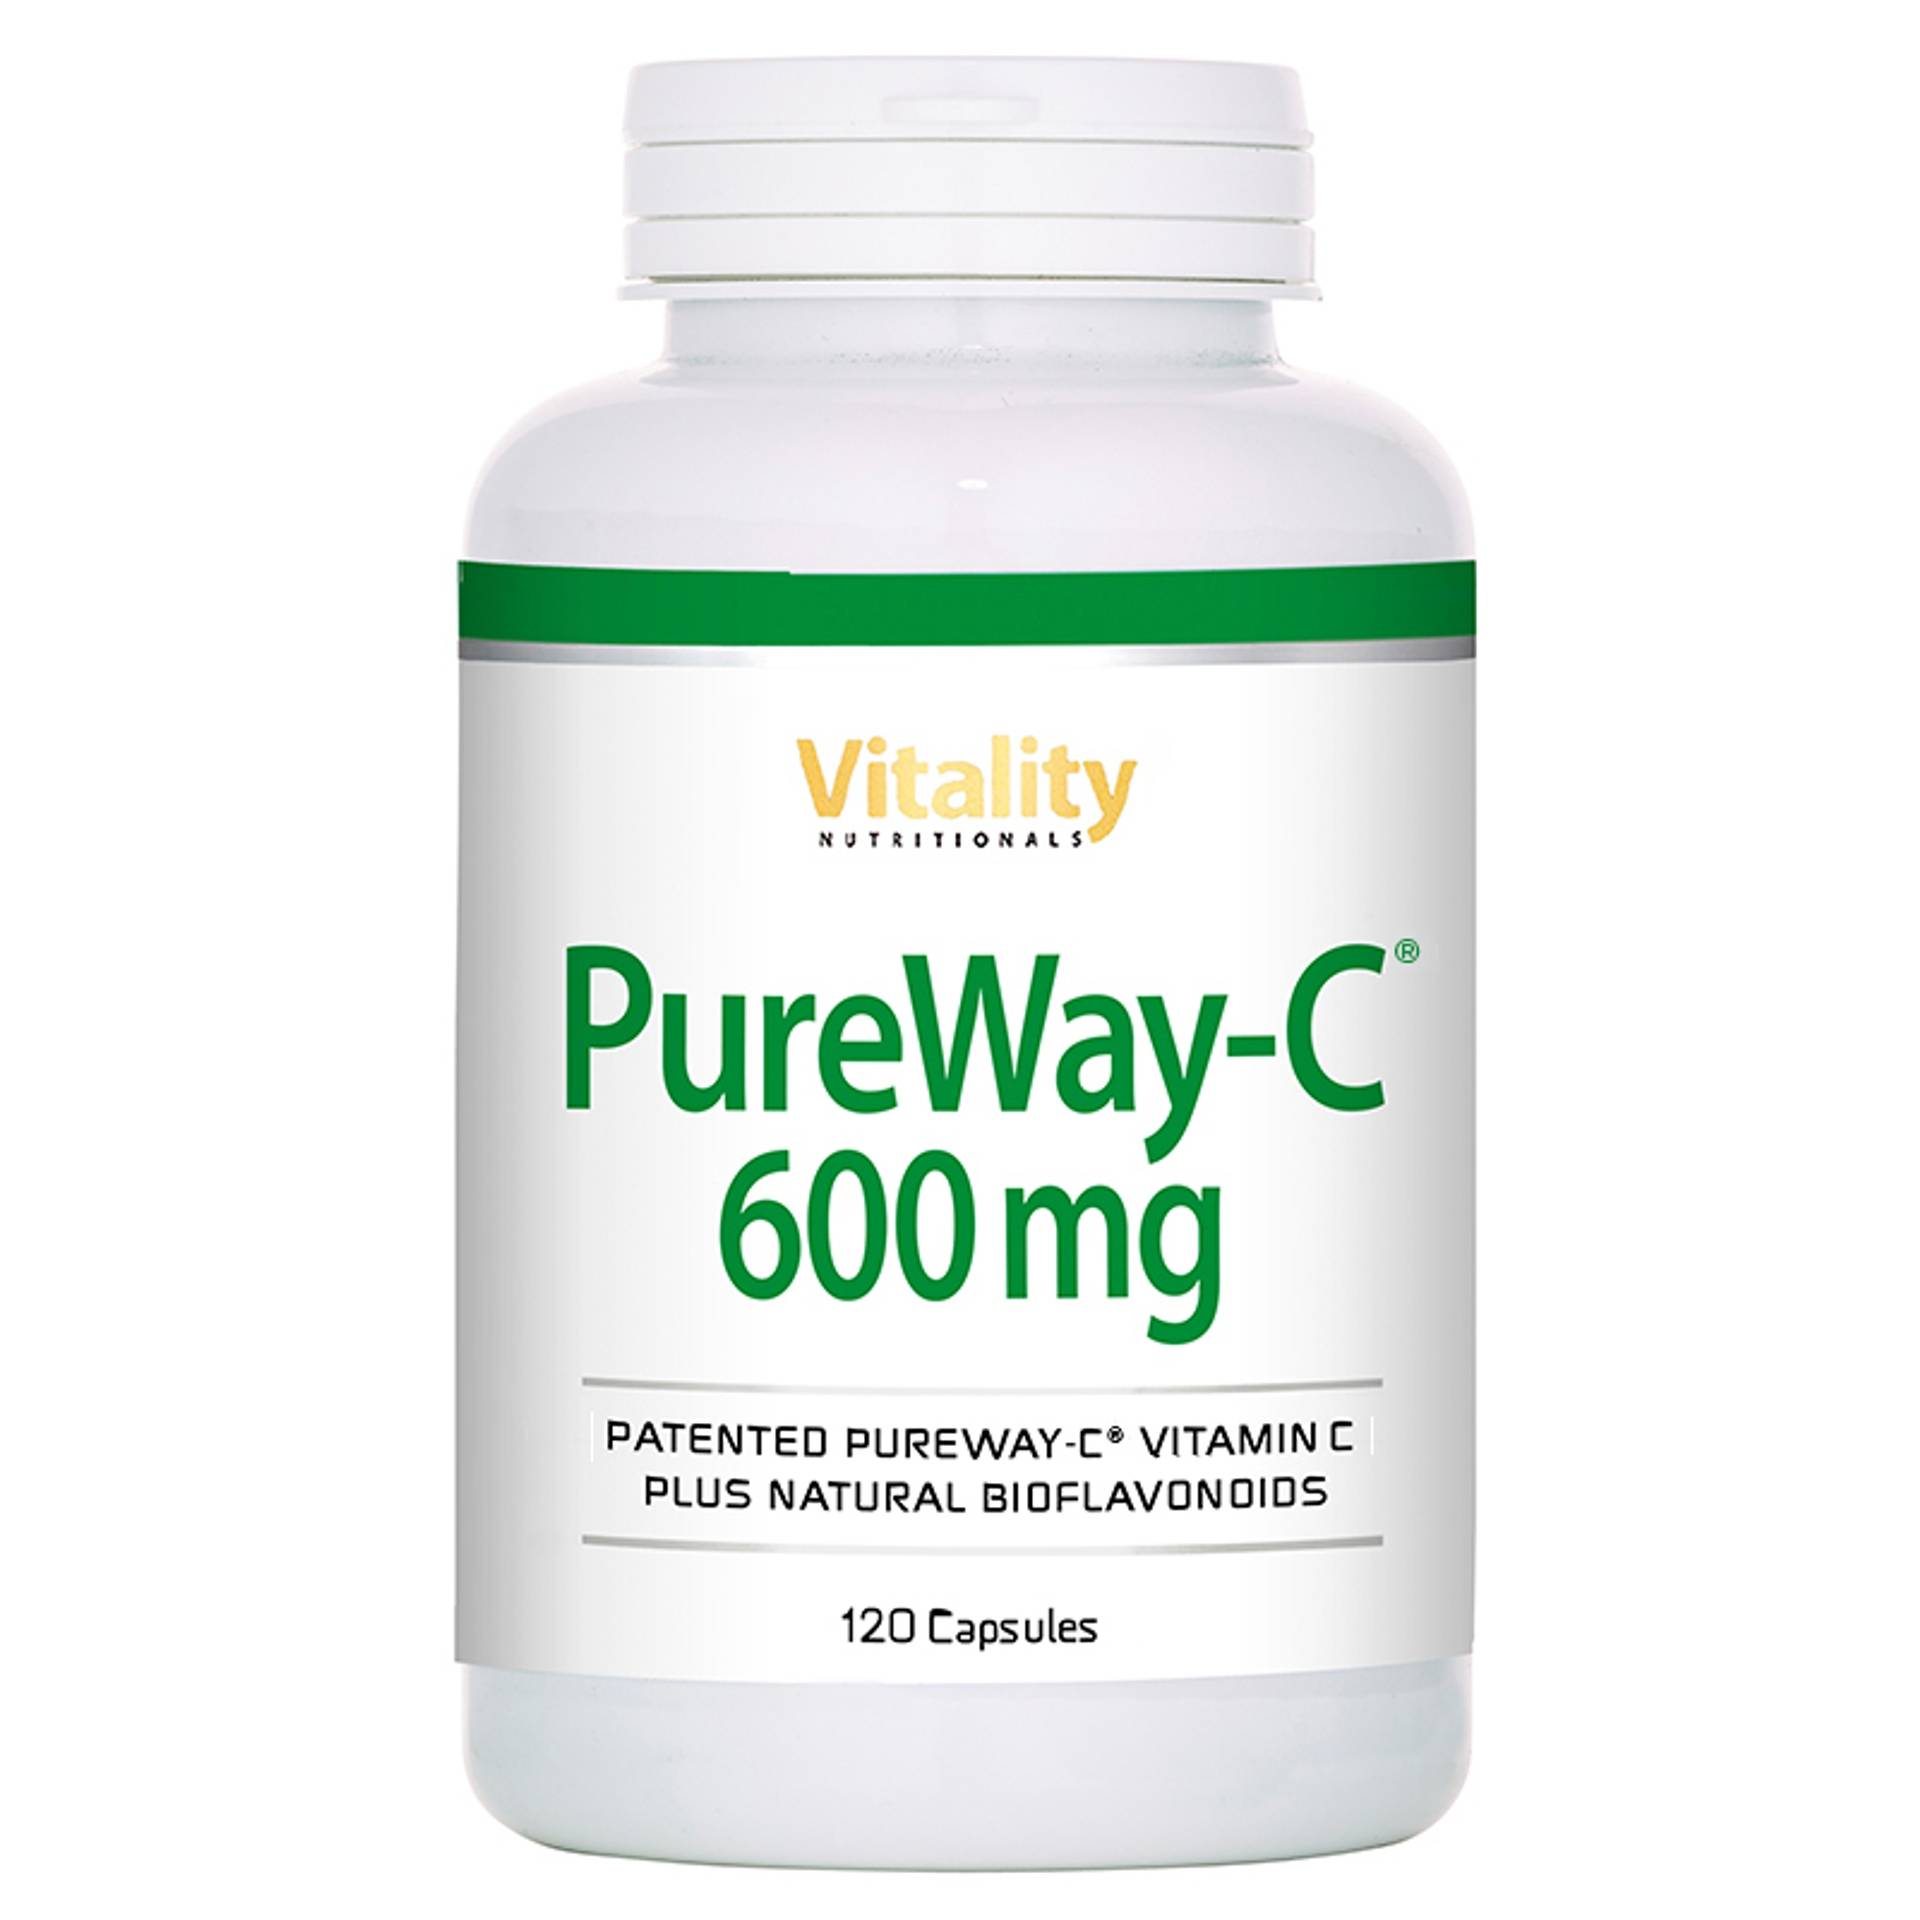 Vitality-Nutritionals-PureWay-C_600mg.jpg